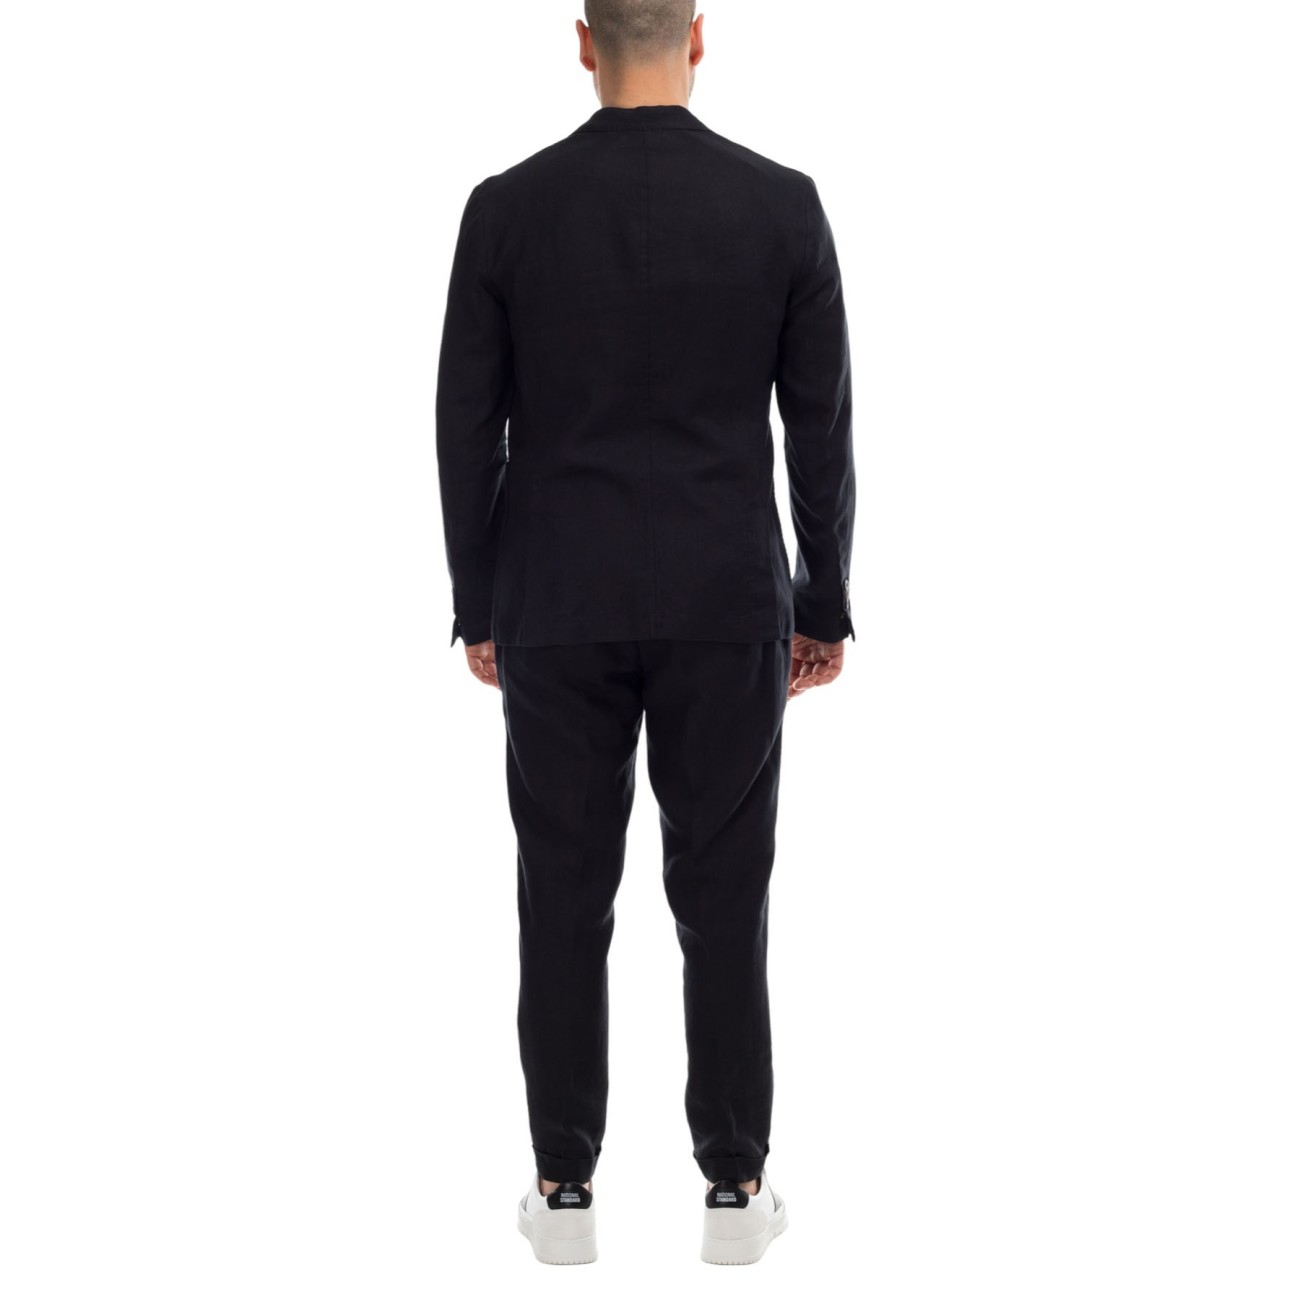 Black linen jacket outfit